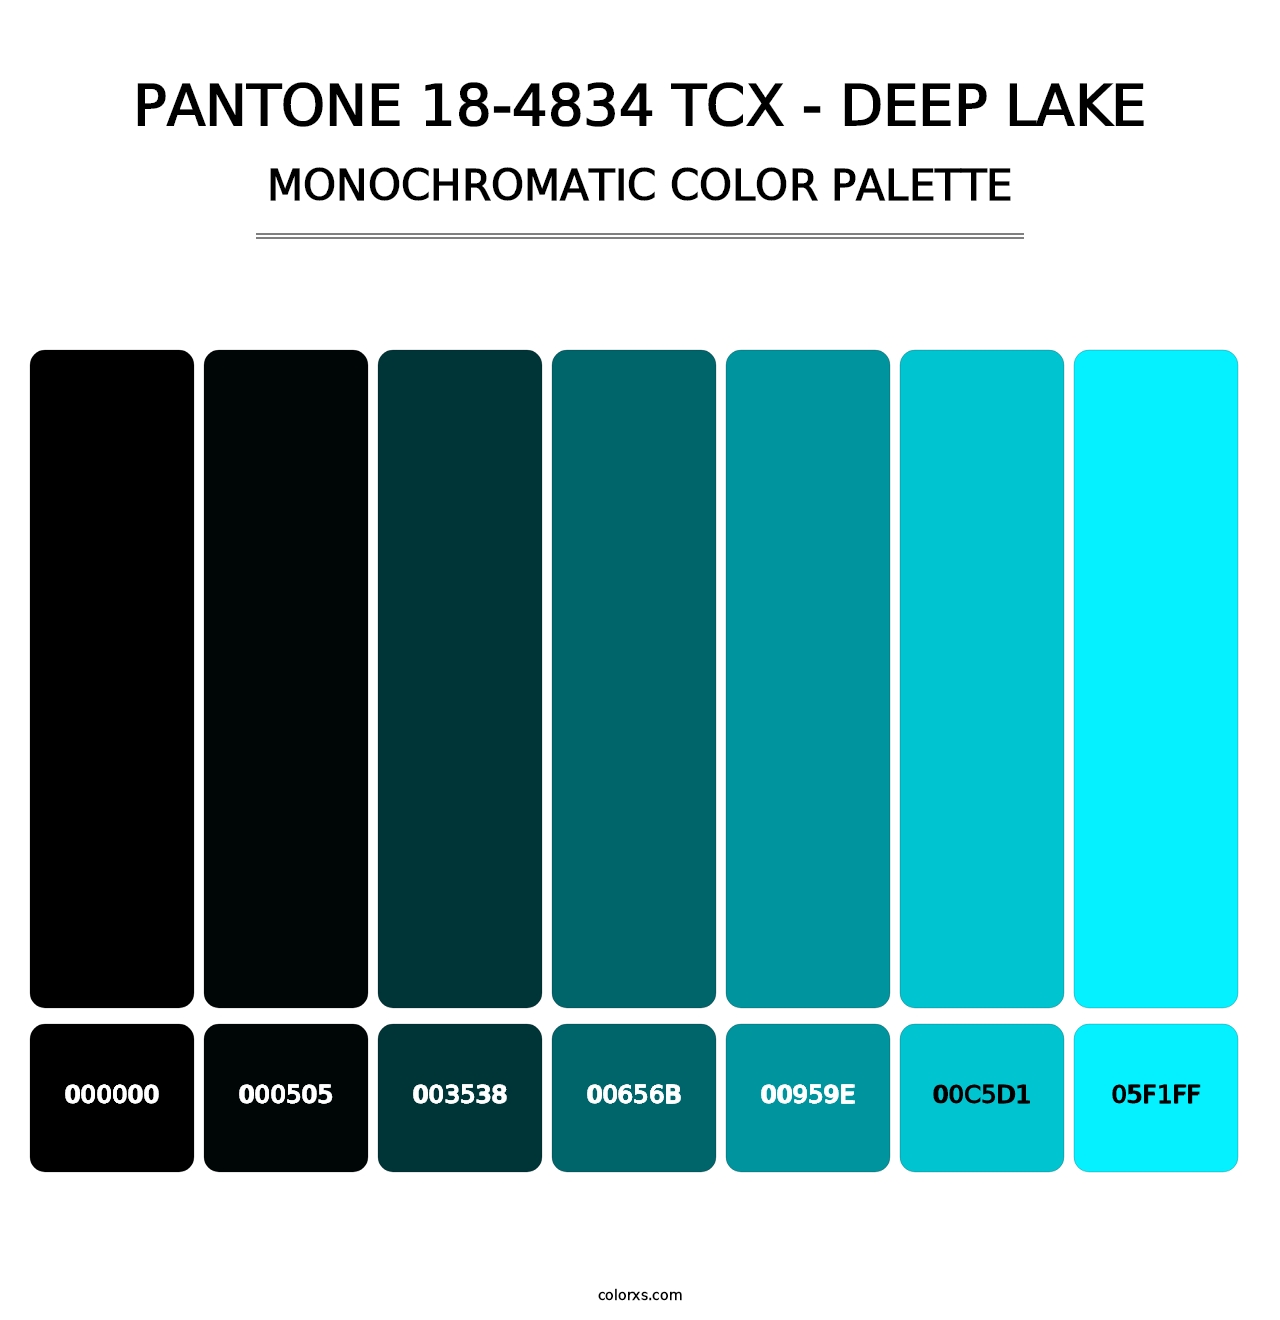 PANTONE 18-4834 TCX - Deep Lake - Monochromatic Color Palette